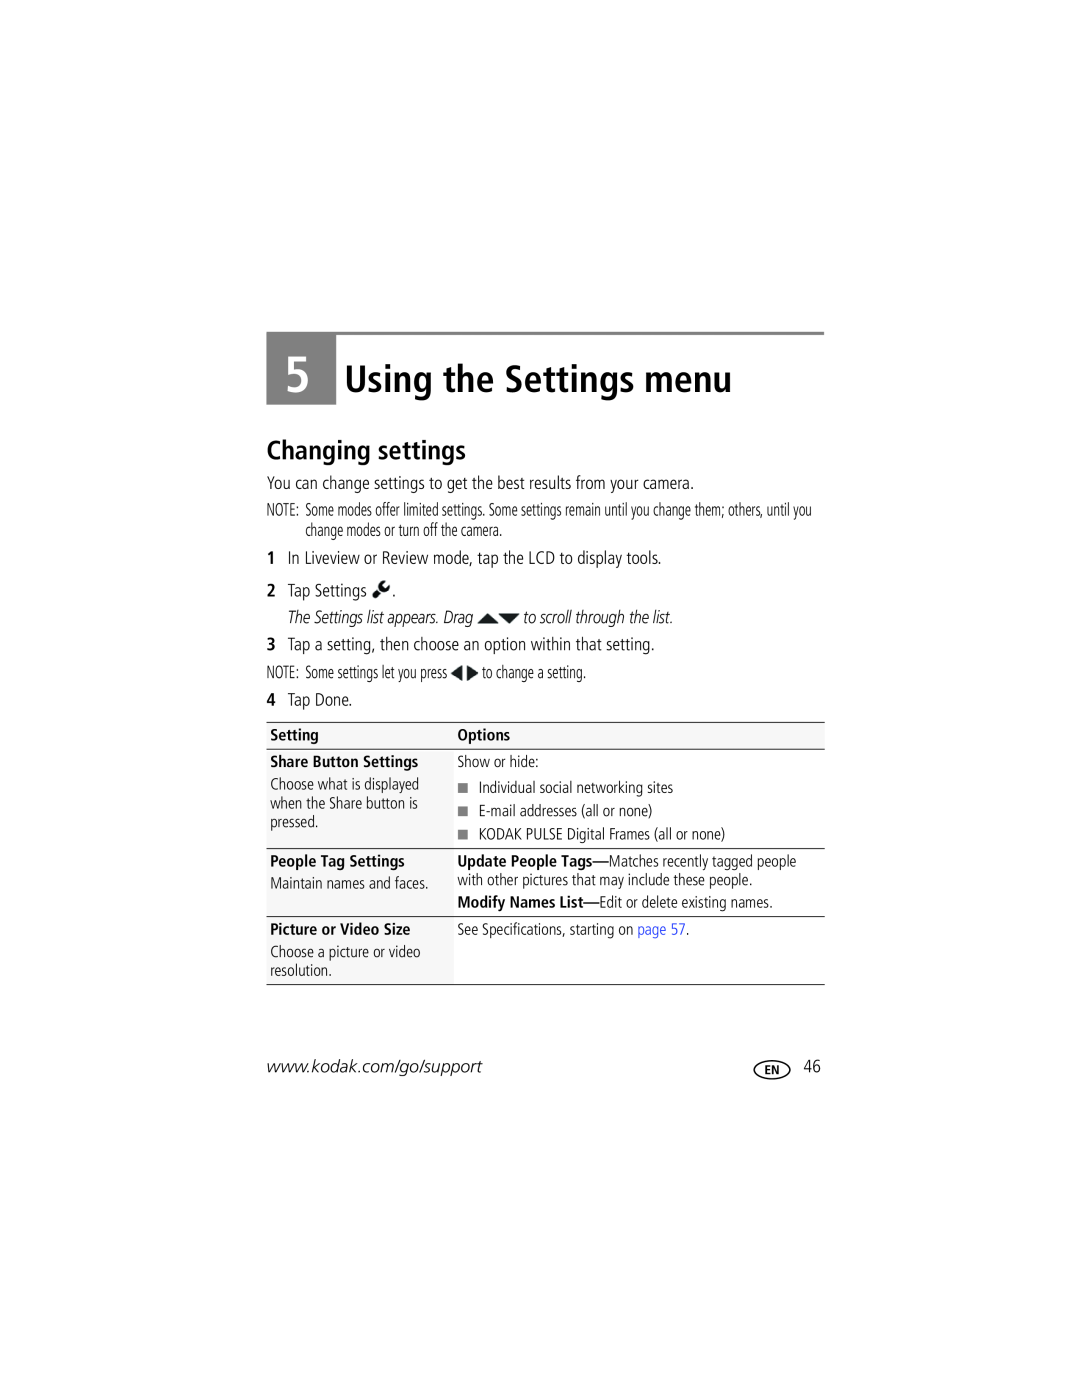 Kodak M577 manual Using the Settings menu, Changing settings, The Settings list appears. Drag to scroll through the list 